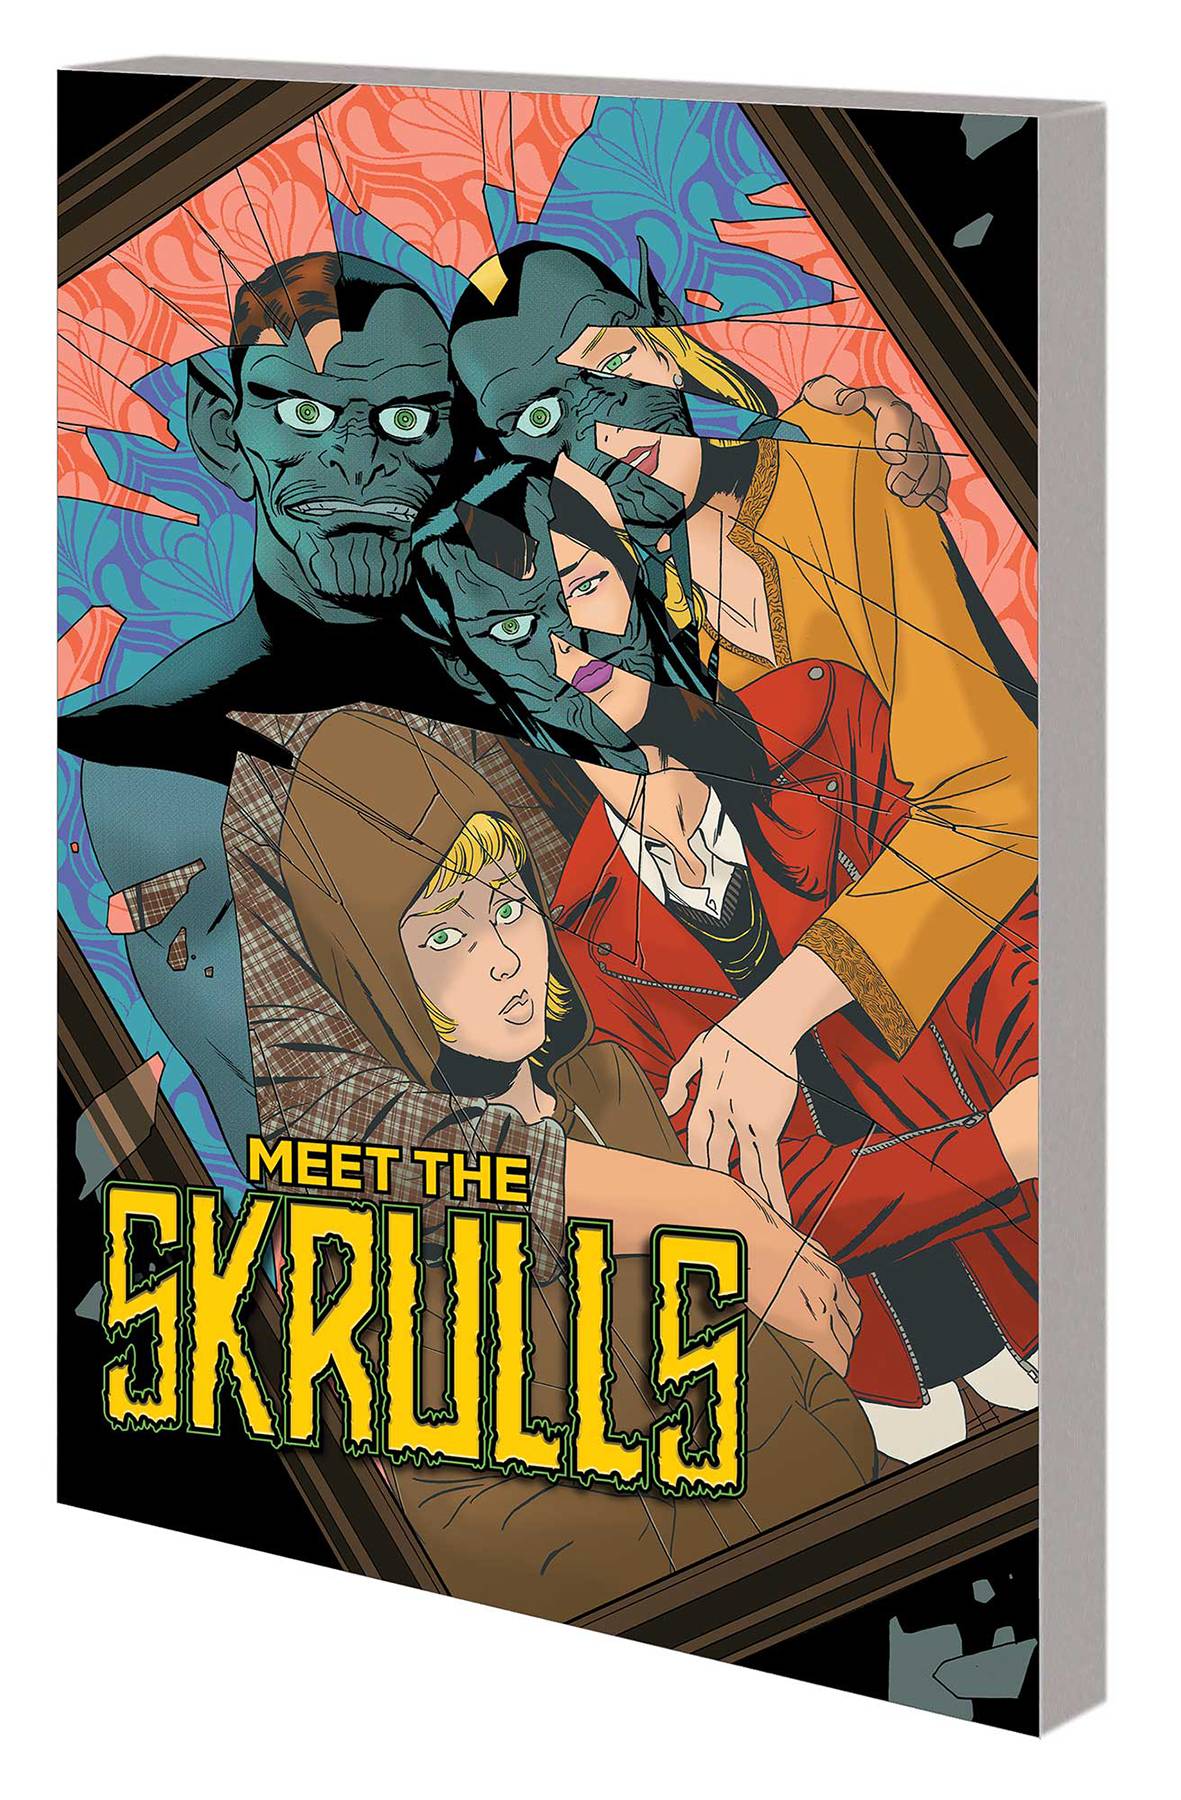 Meet The Skrulls Graphic Novel